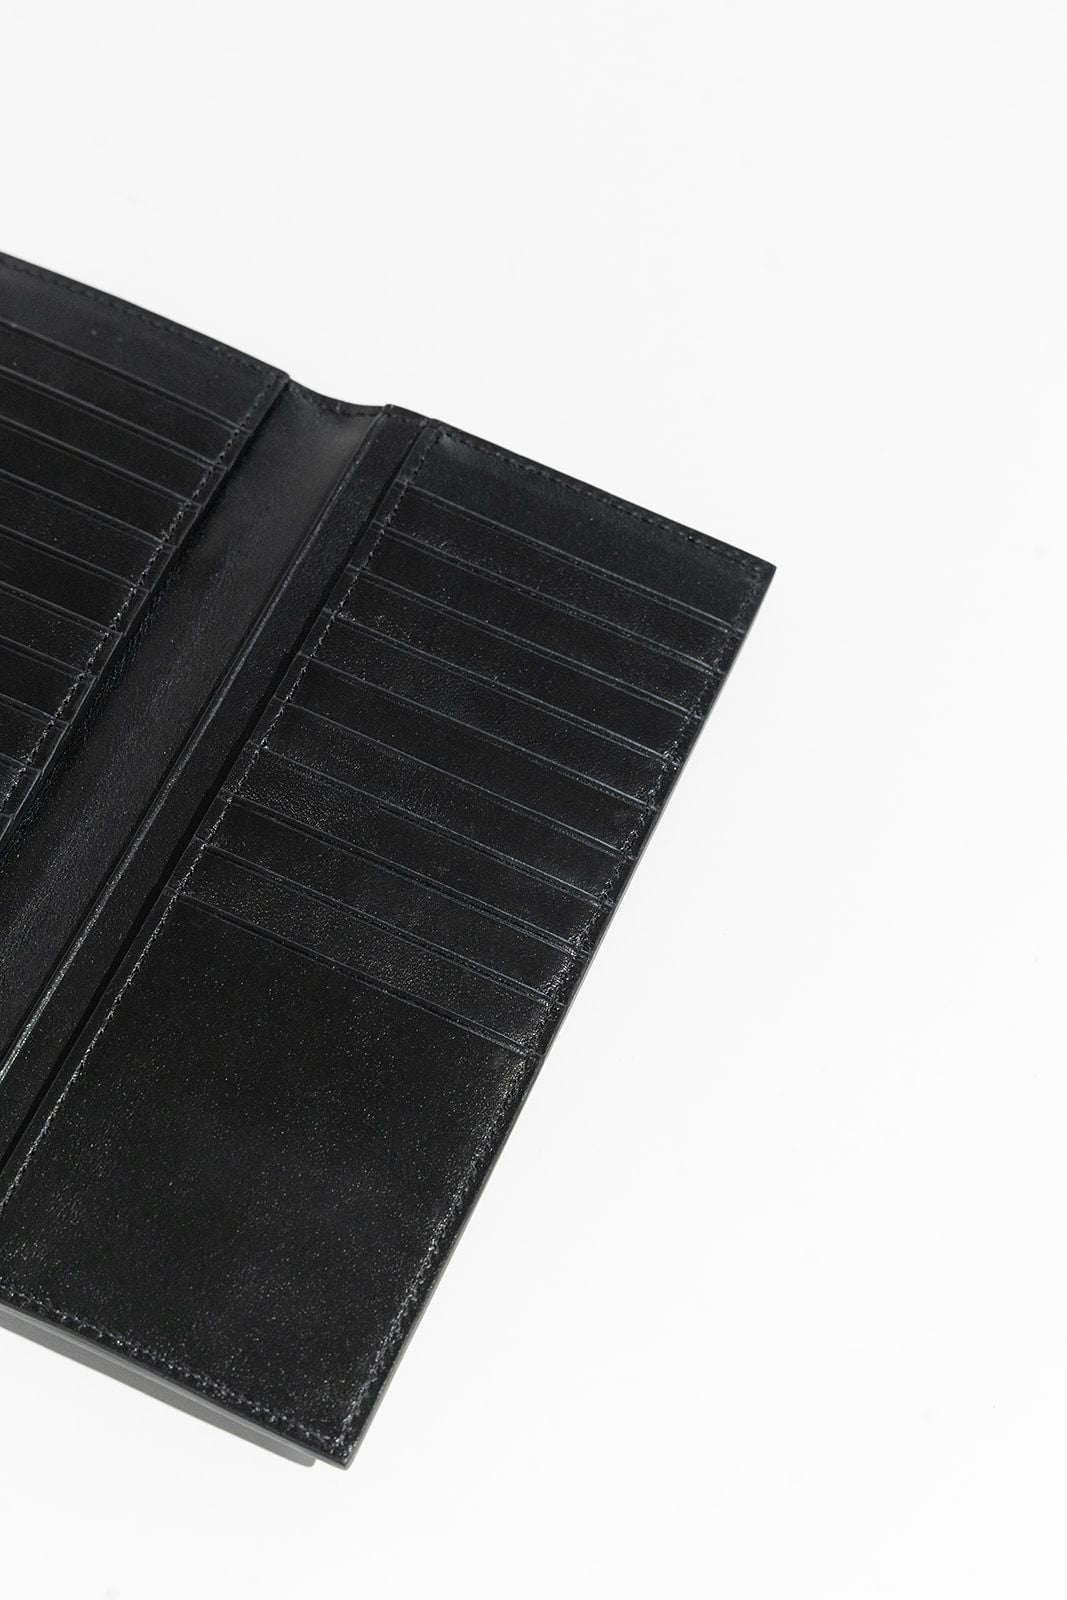 1869 Wallet | Premium Black Leather